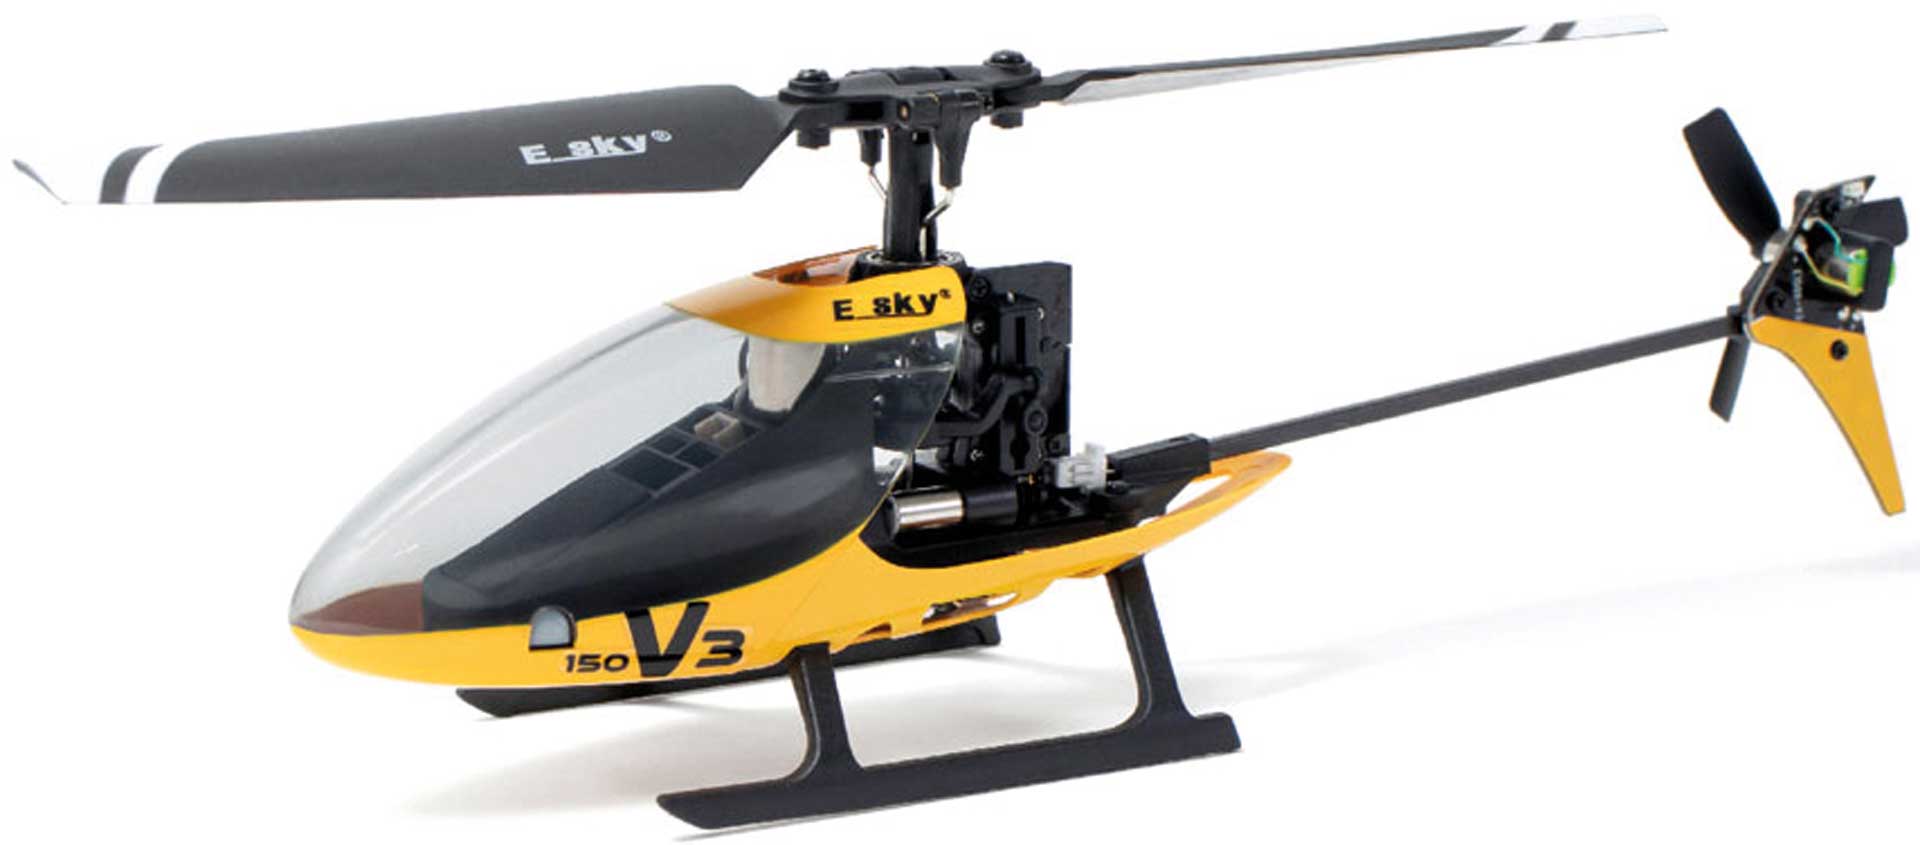 E-SKY 150 V3 Ultra Micro Helikopter - RTF (Mode 1)